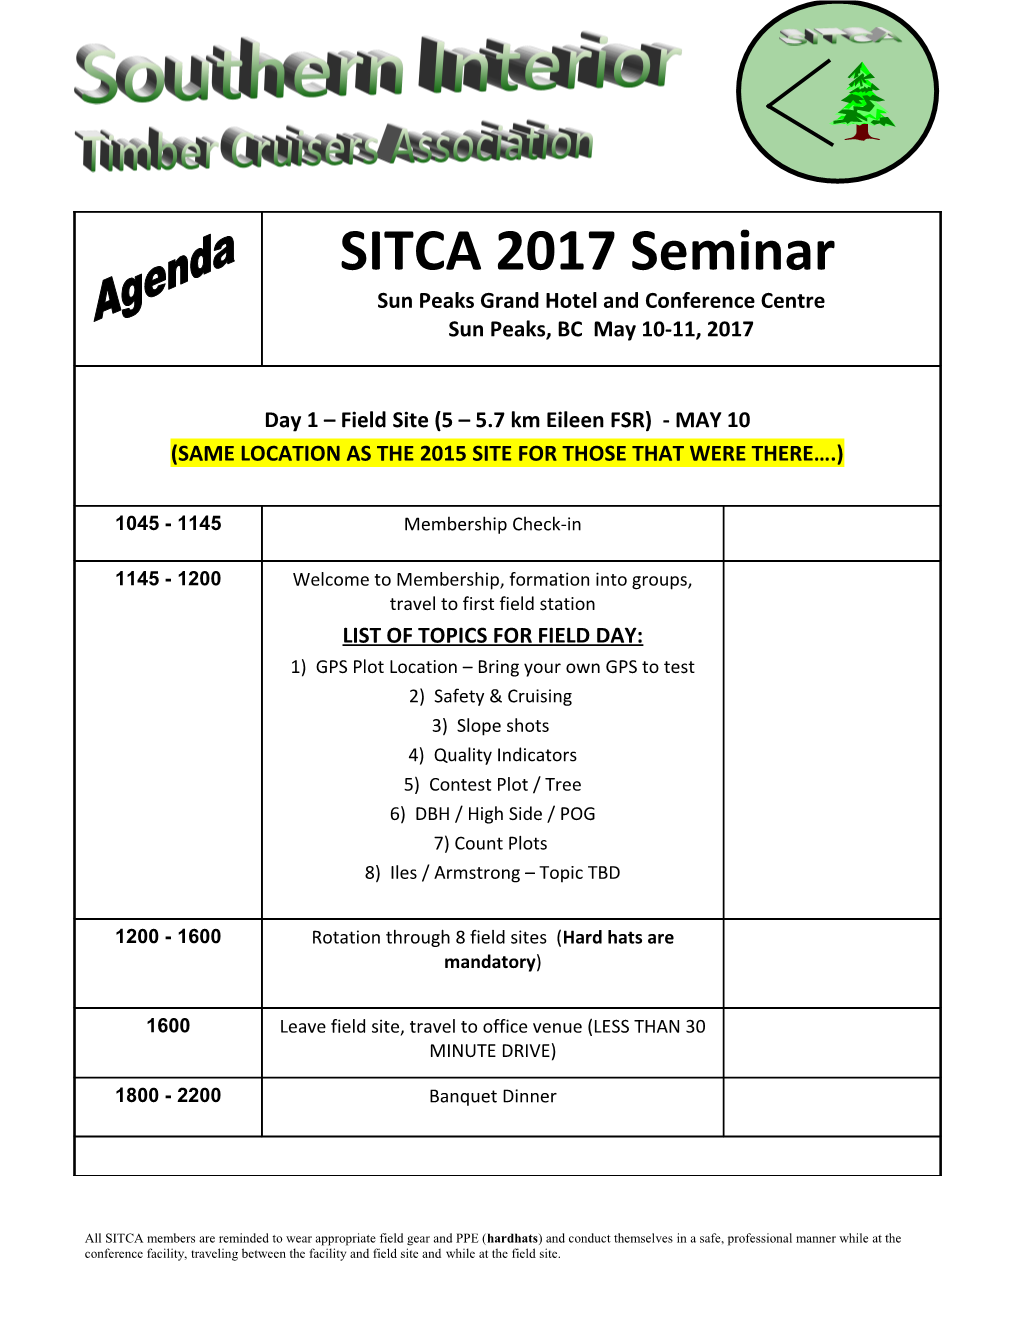 SITCA 2007 Seminar - Consider the Impacts